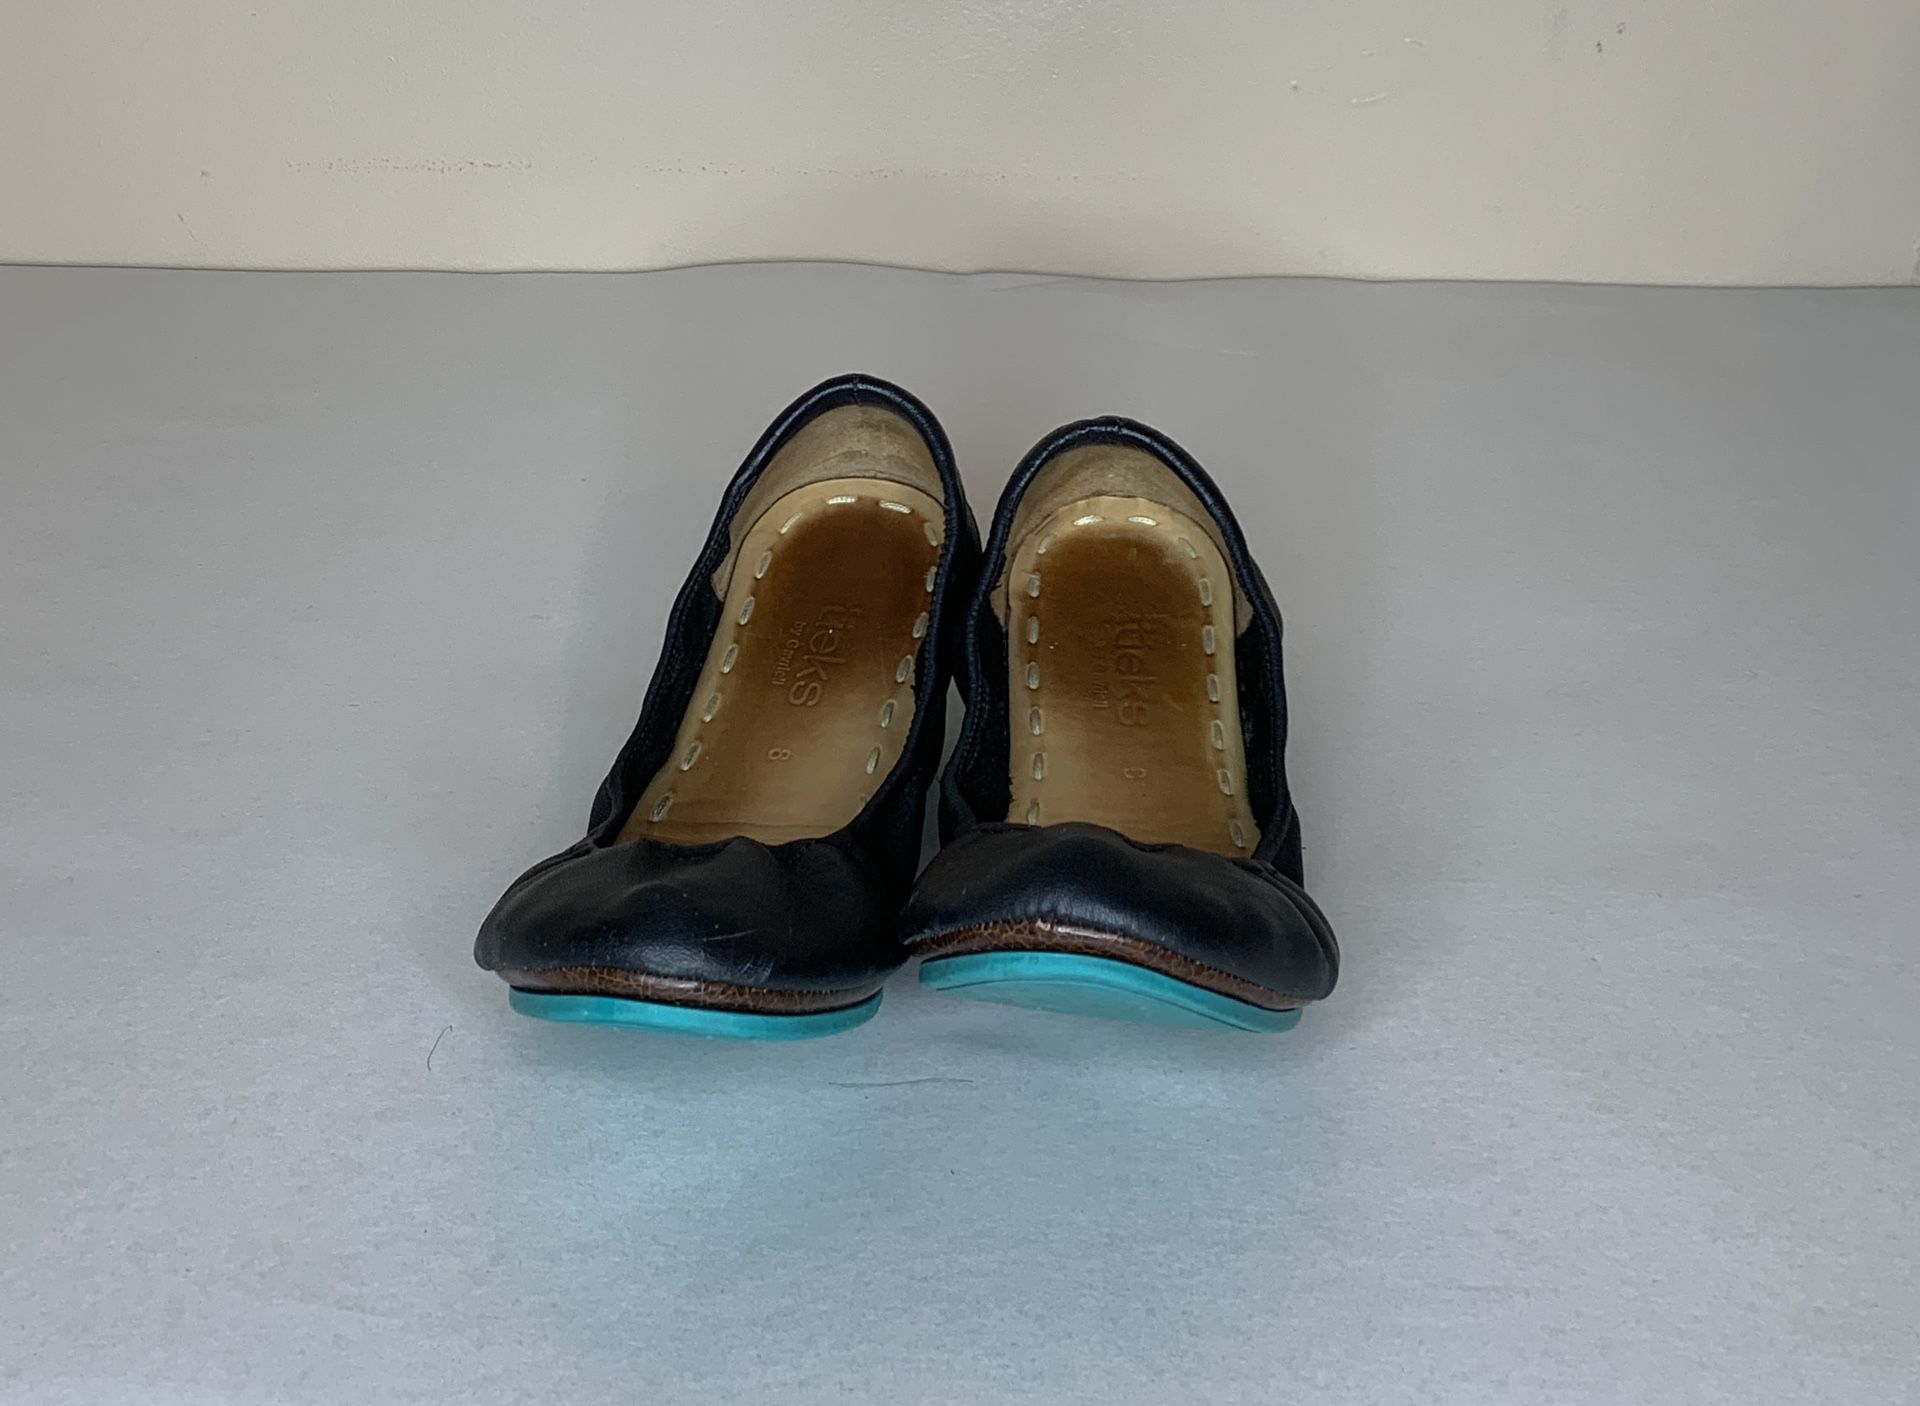 Tieks by Gavrieli Matte Black Leather Flats Size 8 Ballet Shoes Foldable